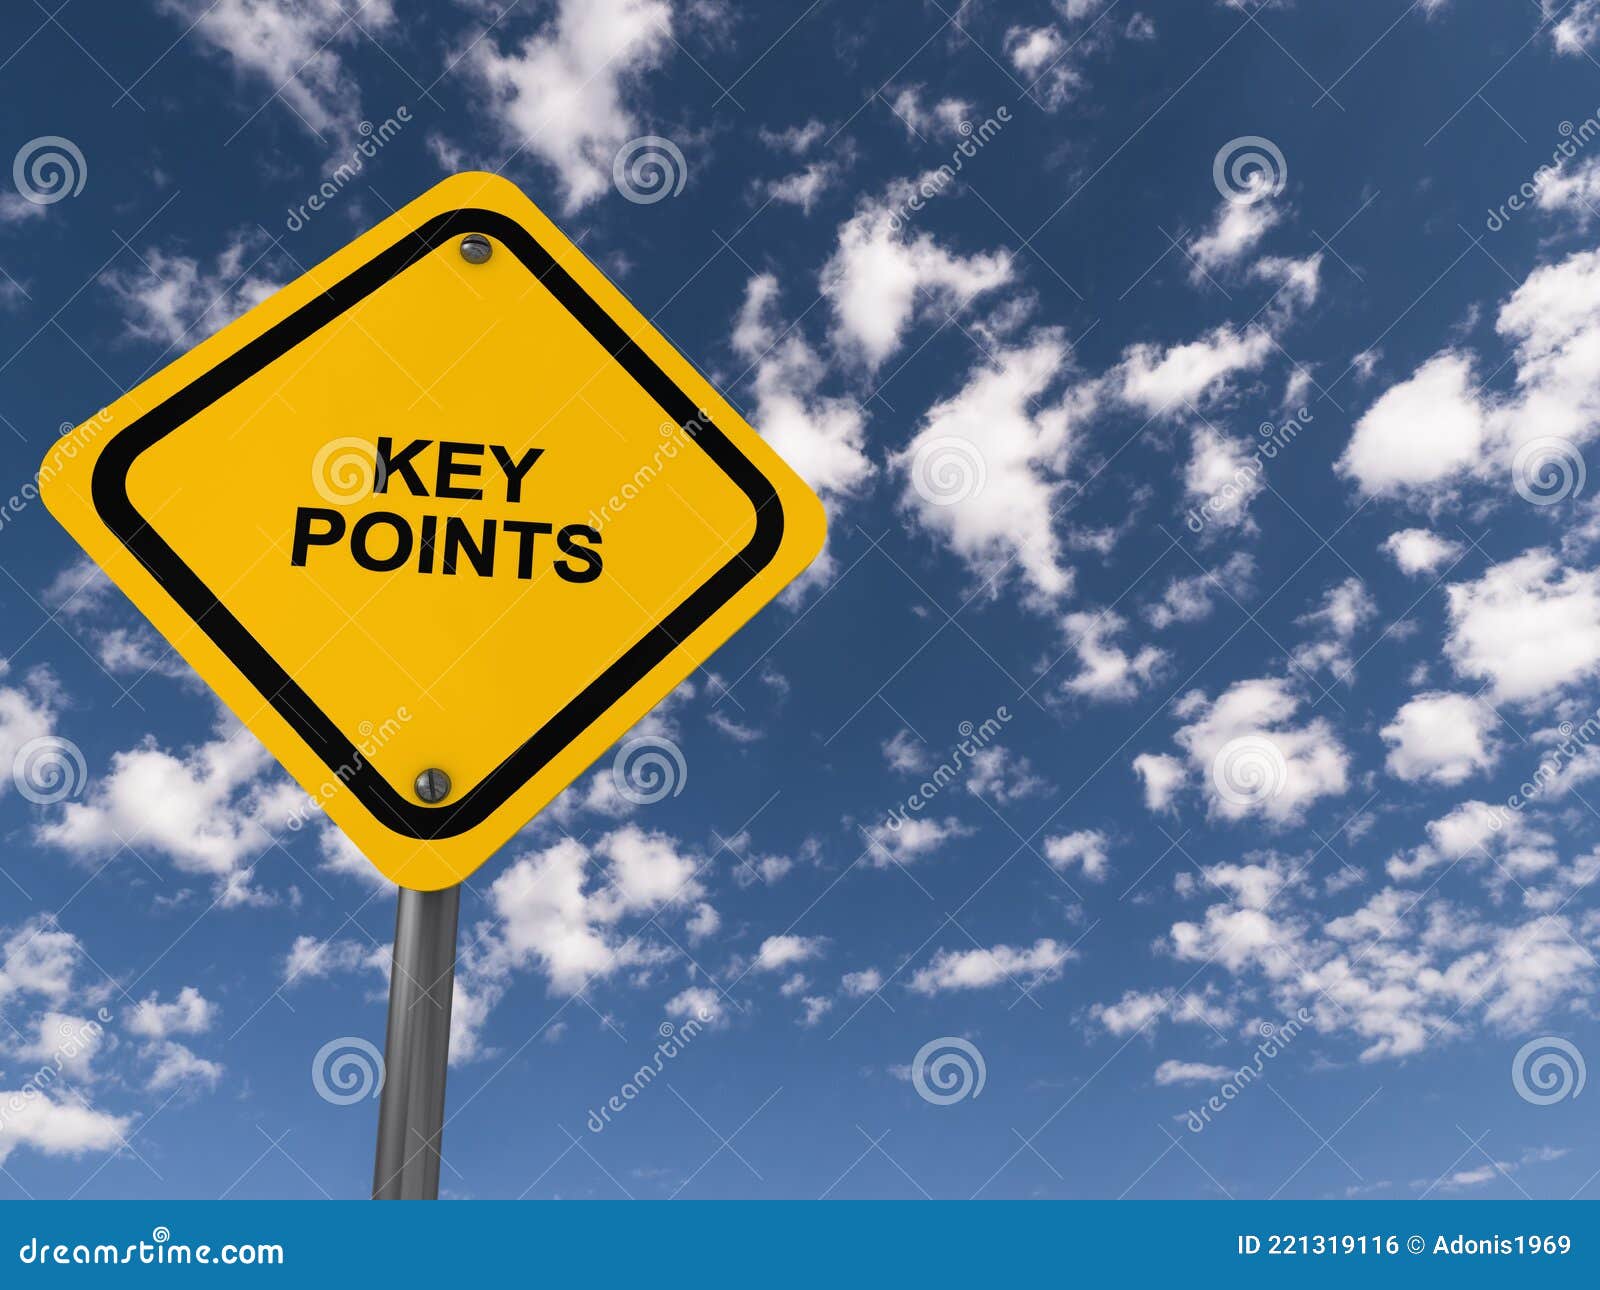 key points traffic sign